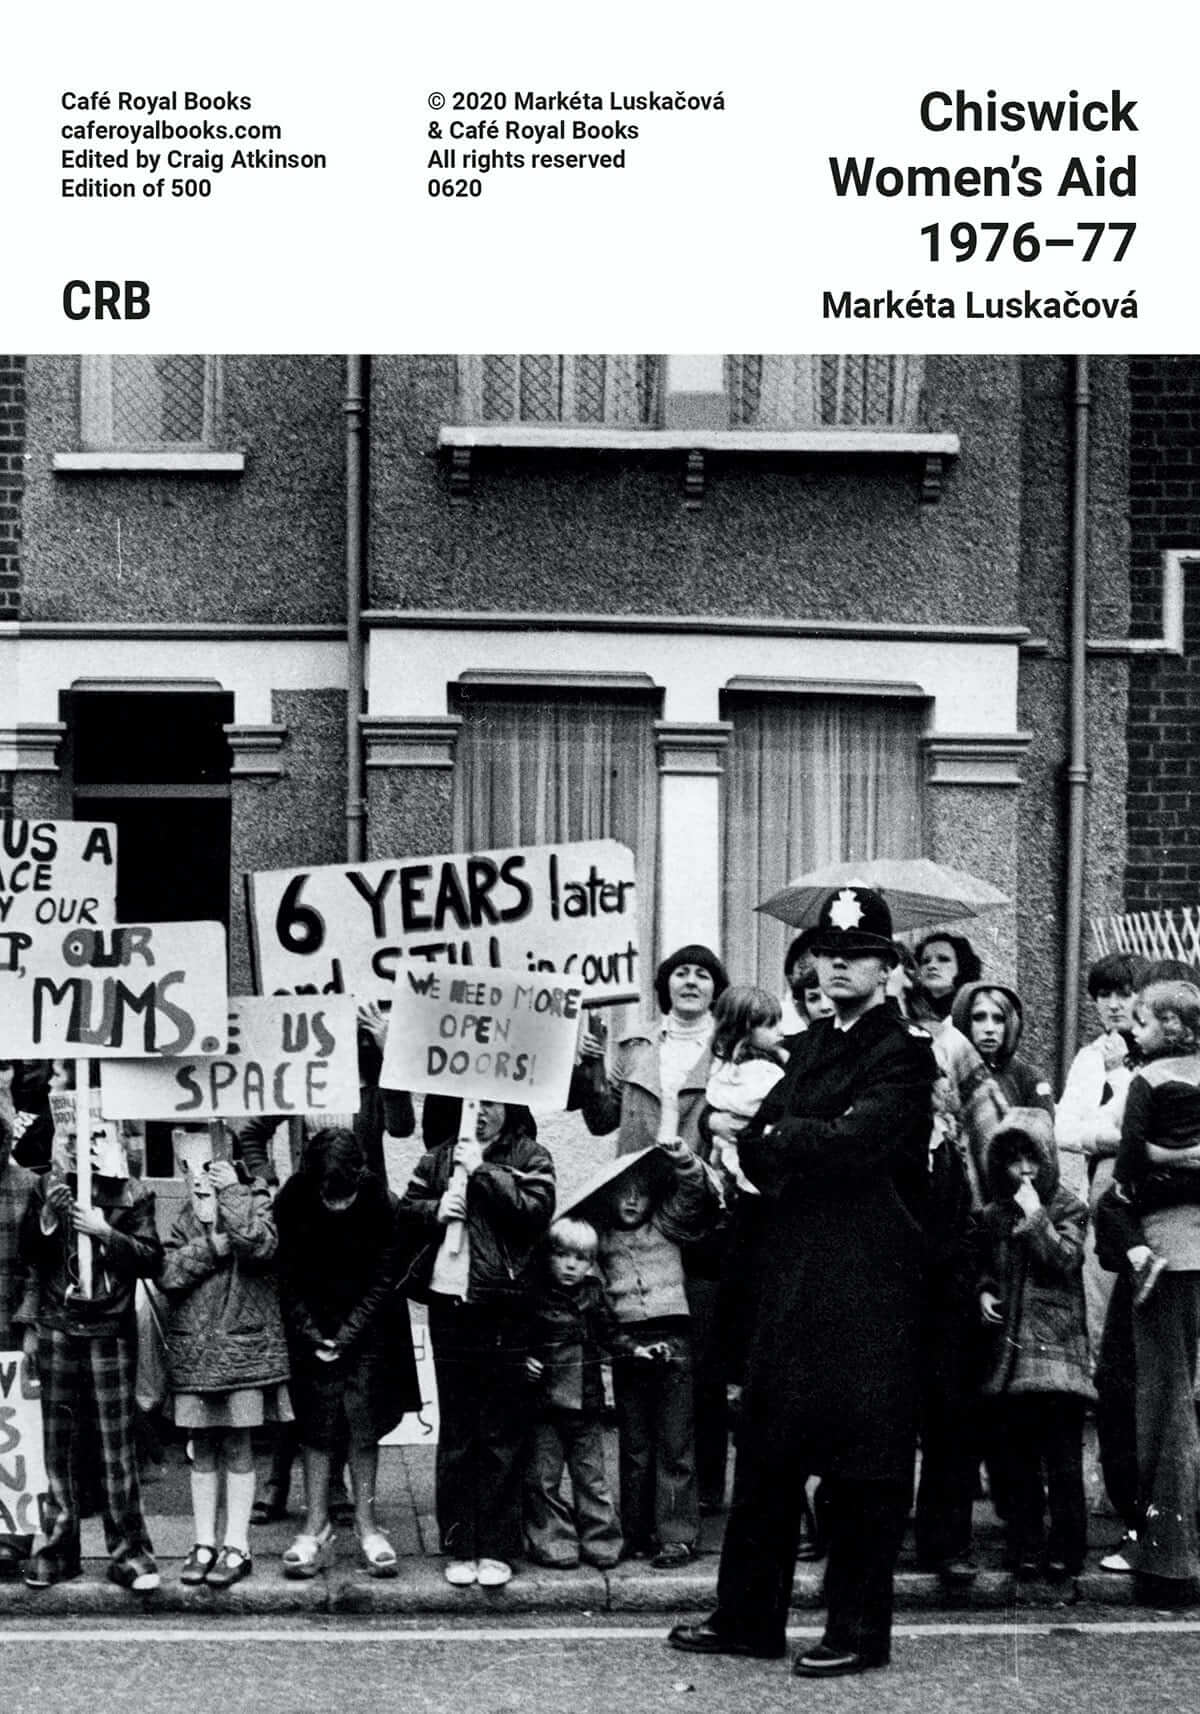 Marketa Luskacova Chiswick Womens Aid 1976 77 1